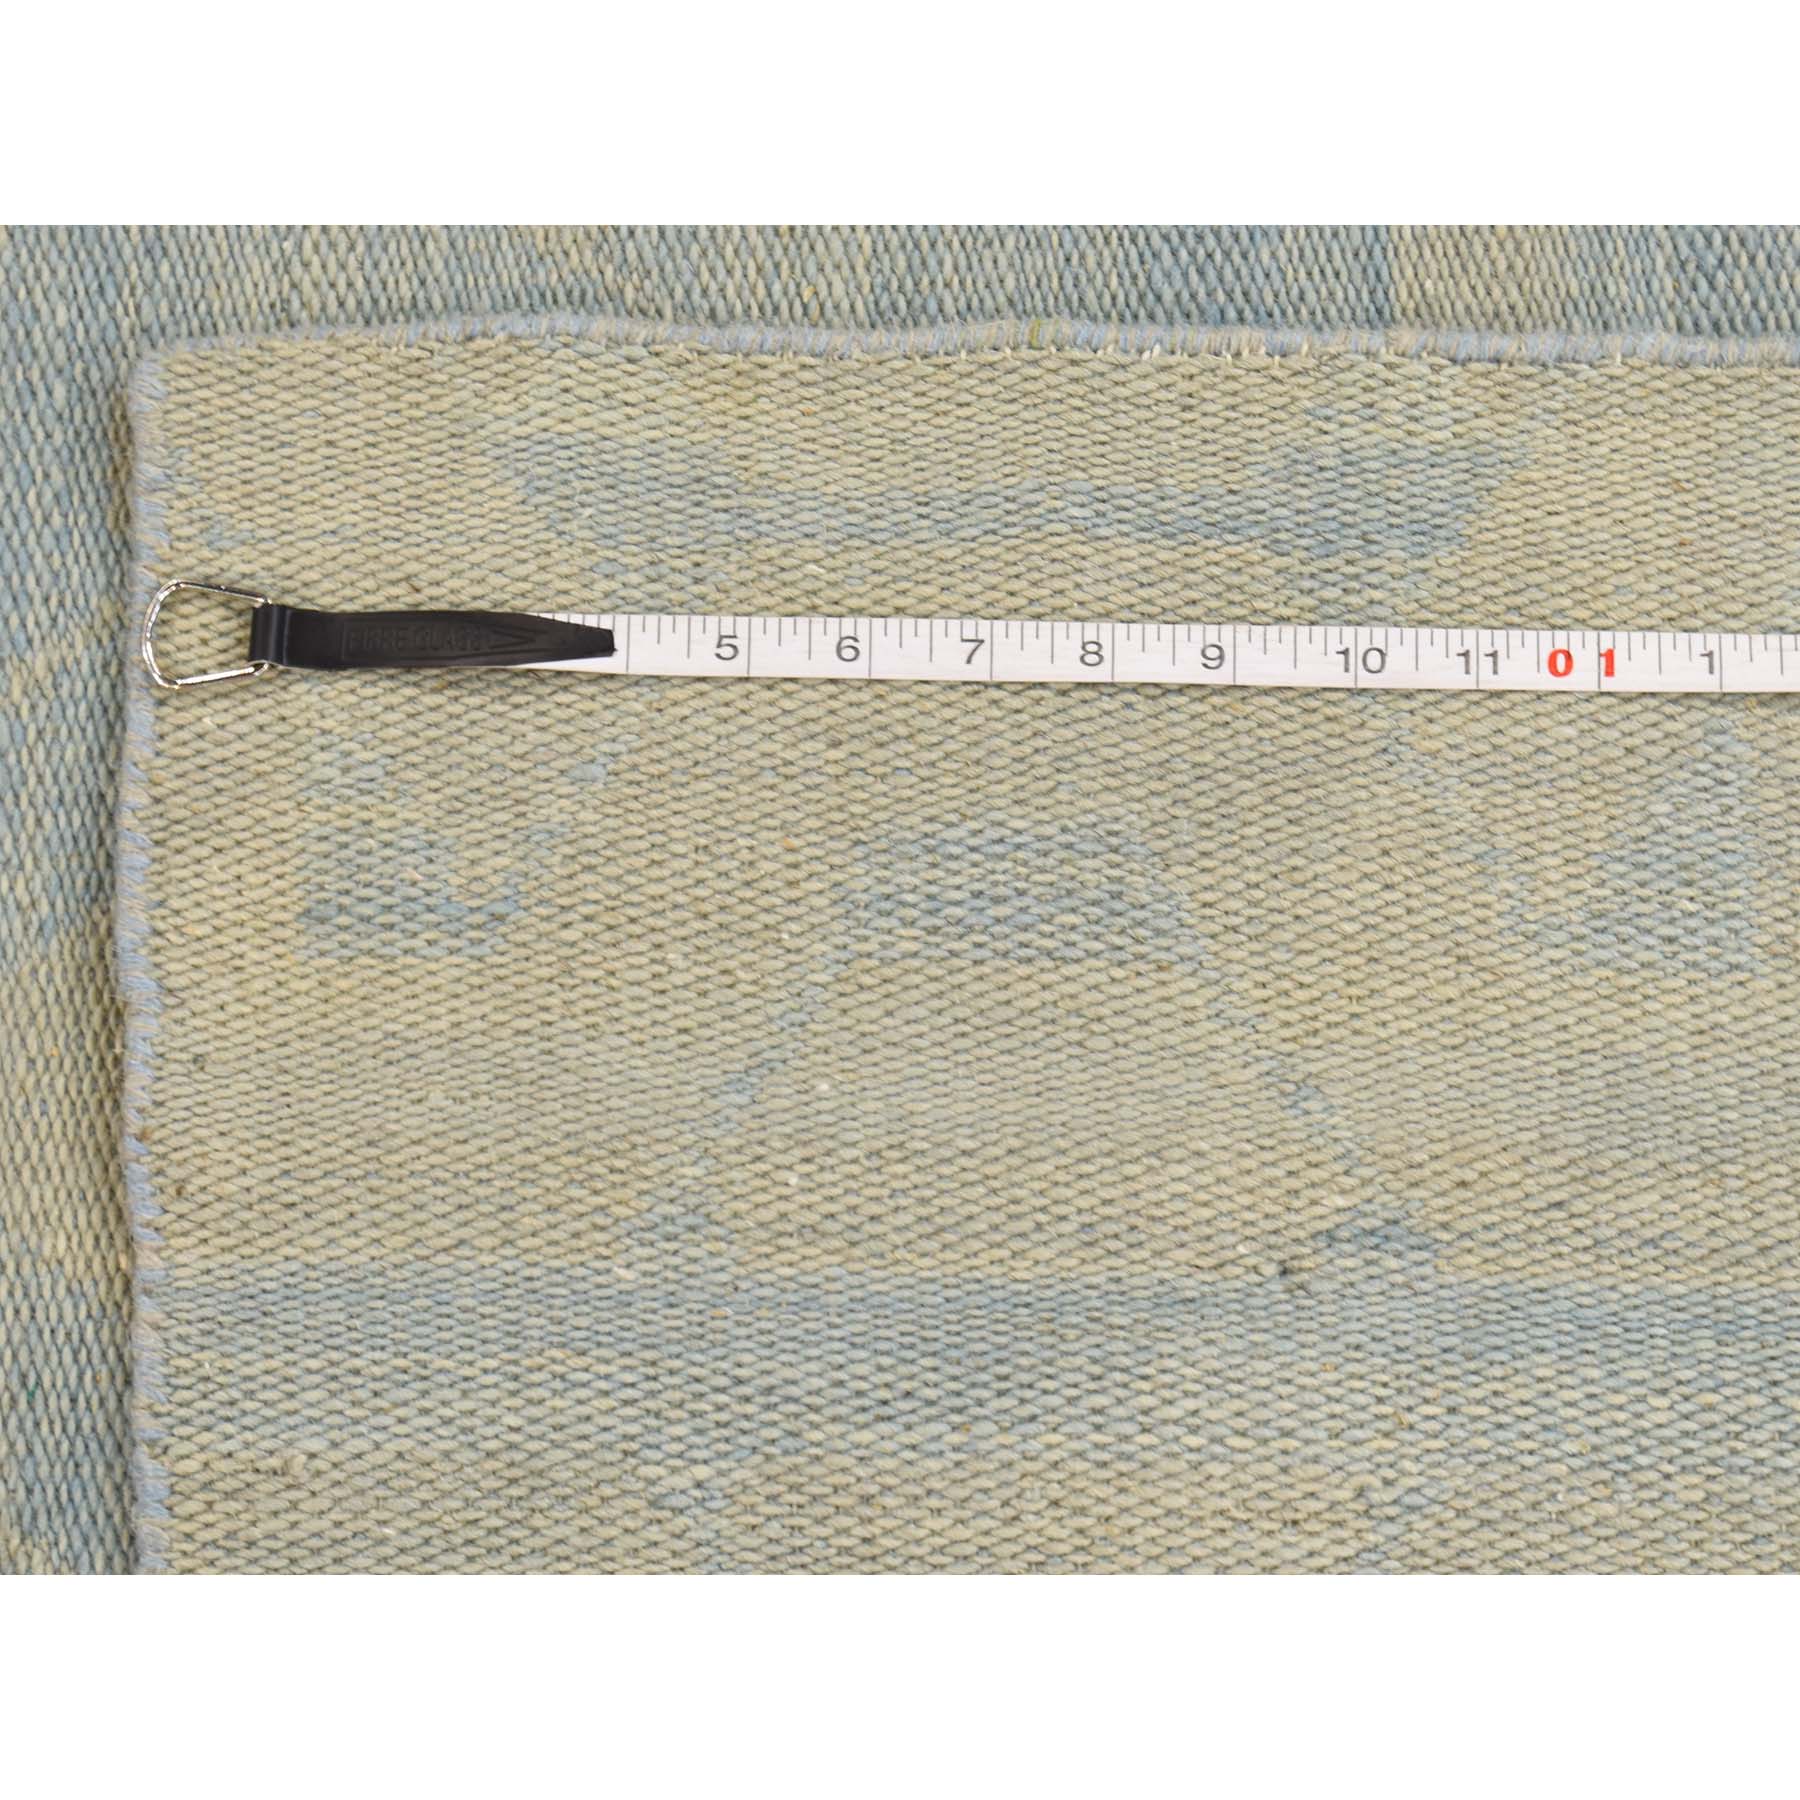 5'x6'10'' Hand-Woven Pure Wool Sky Blue Reversible Kilim Flat Weave Rug 